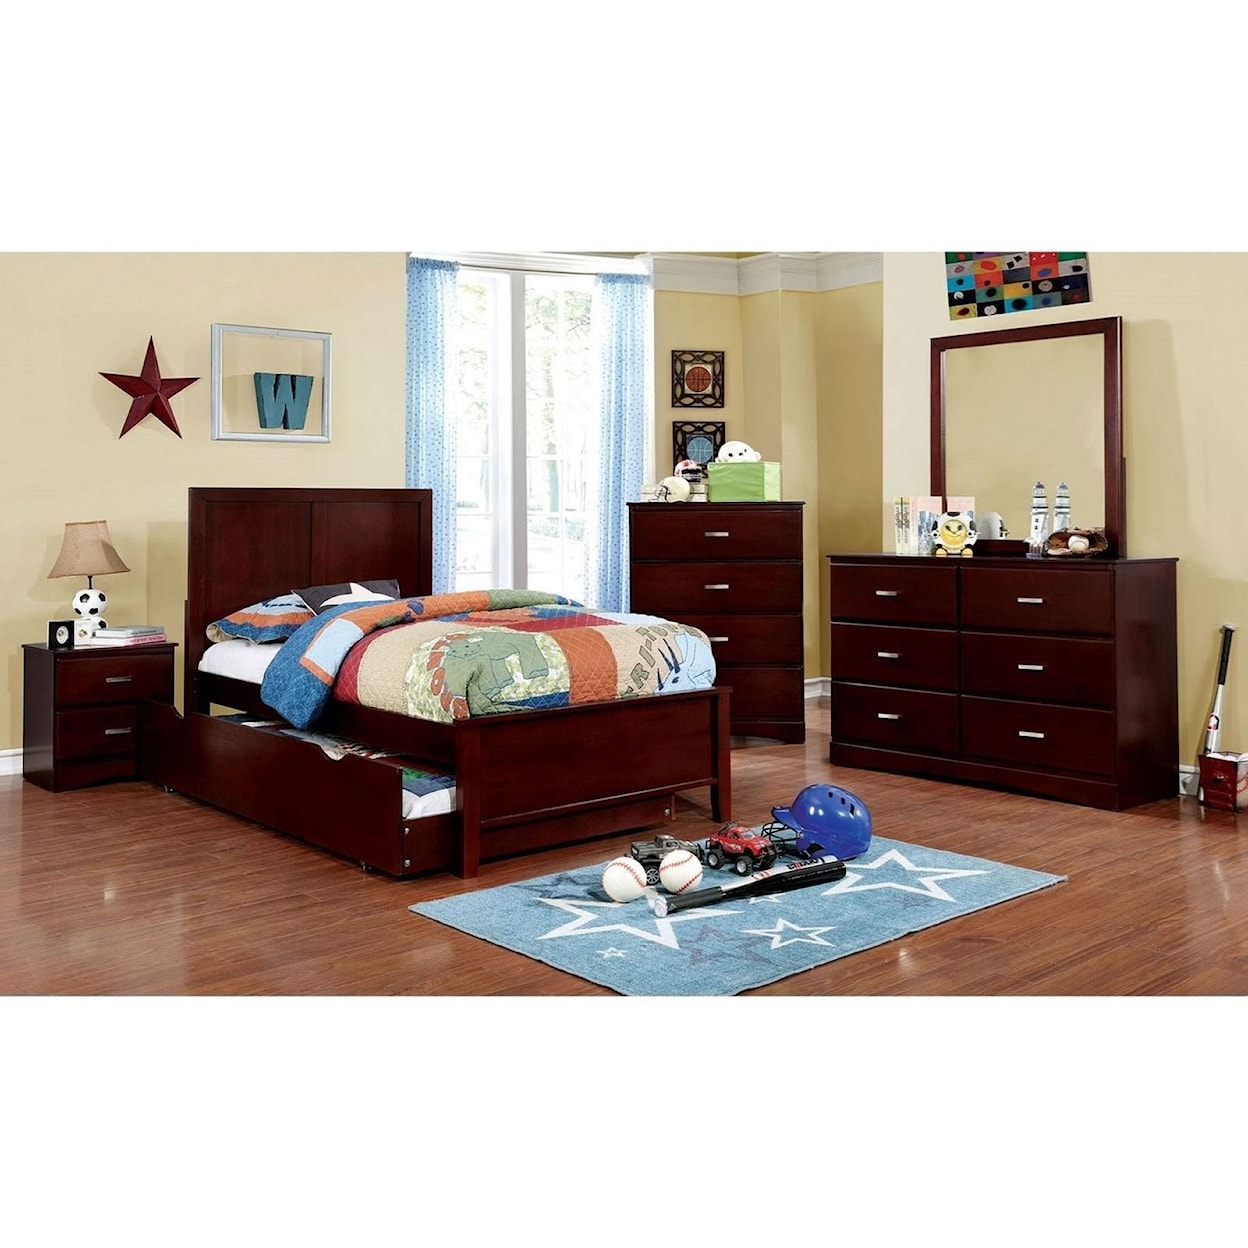 Furniture of America Prismo Twin Bed